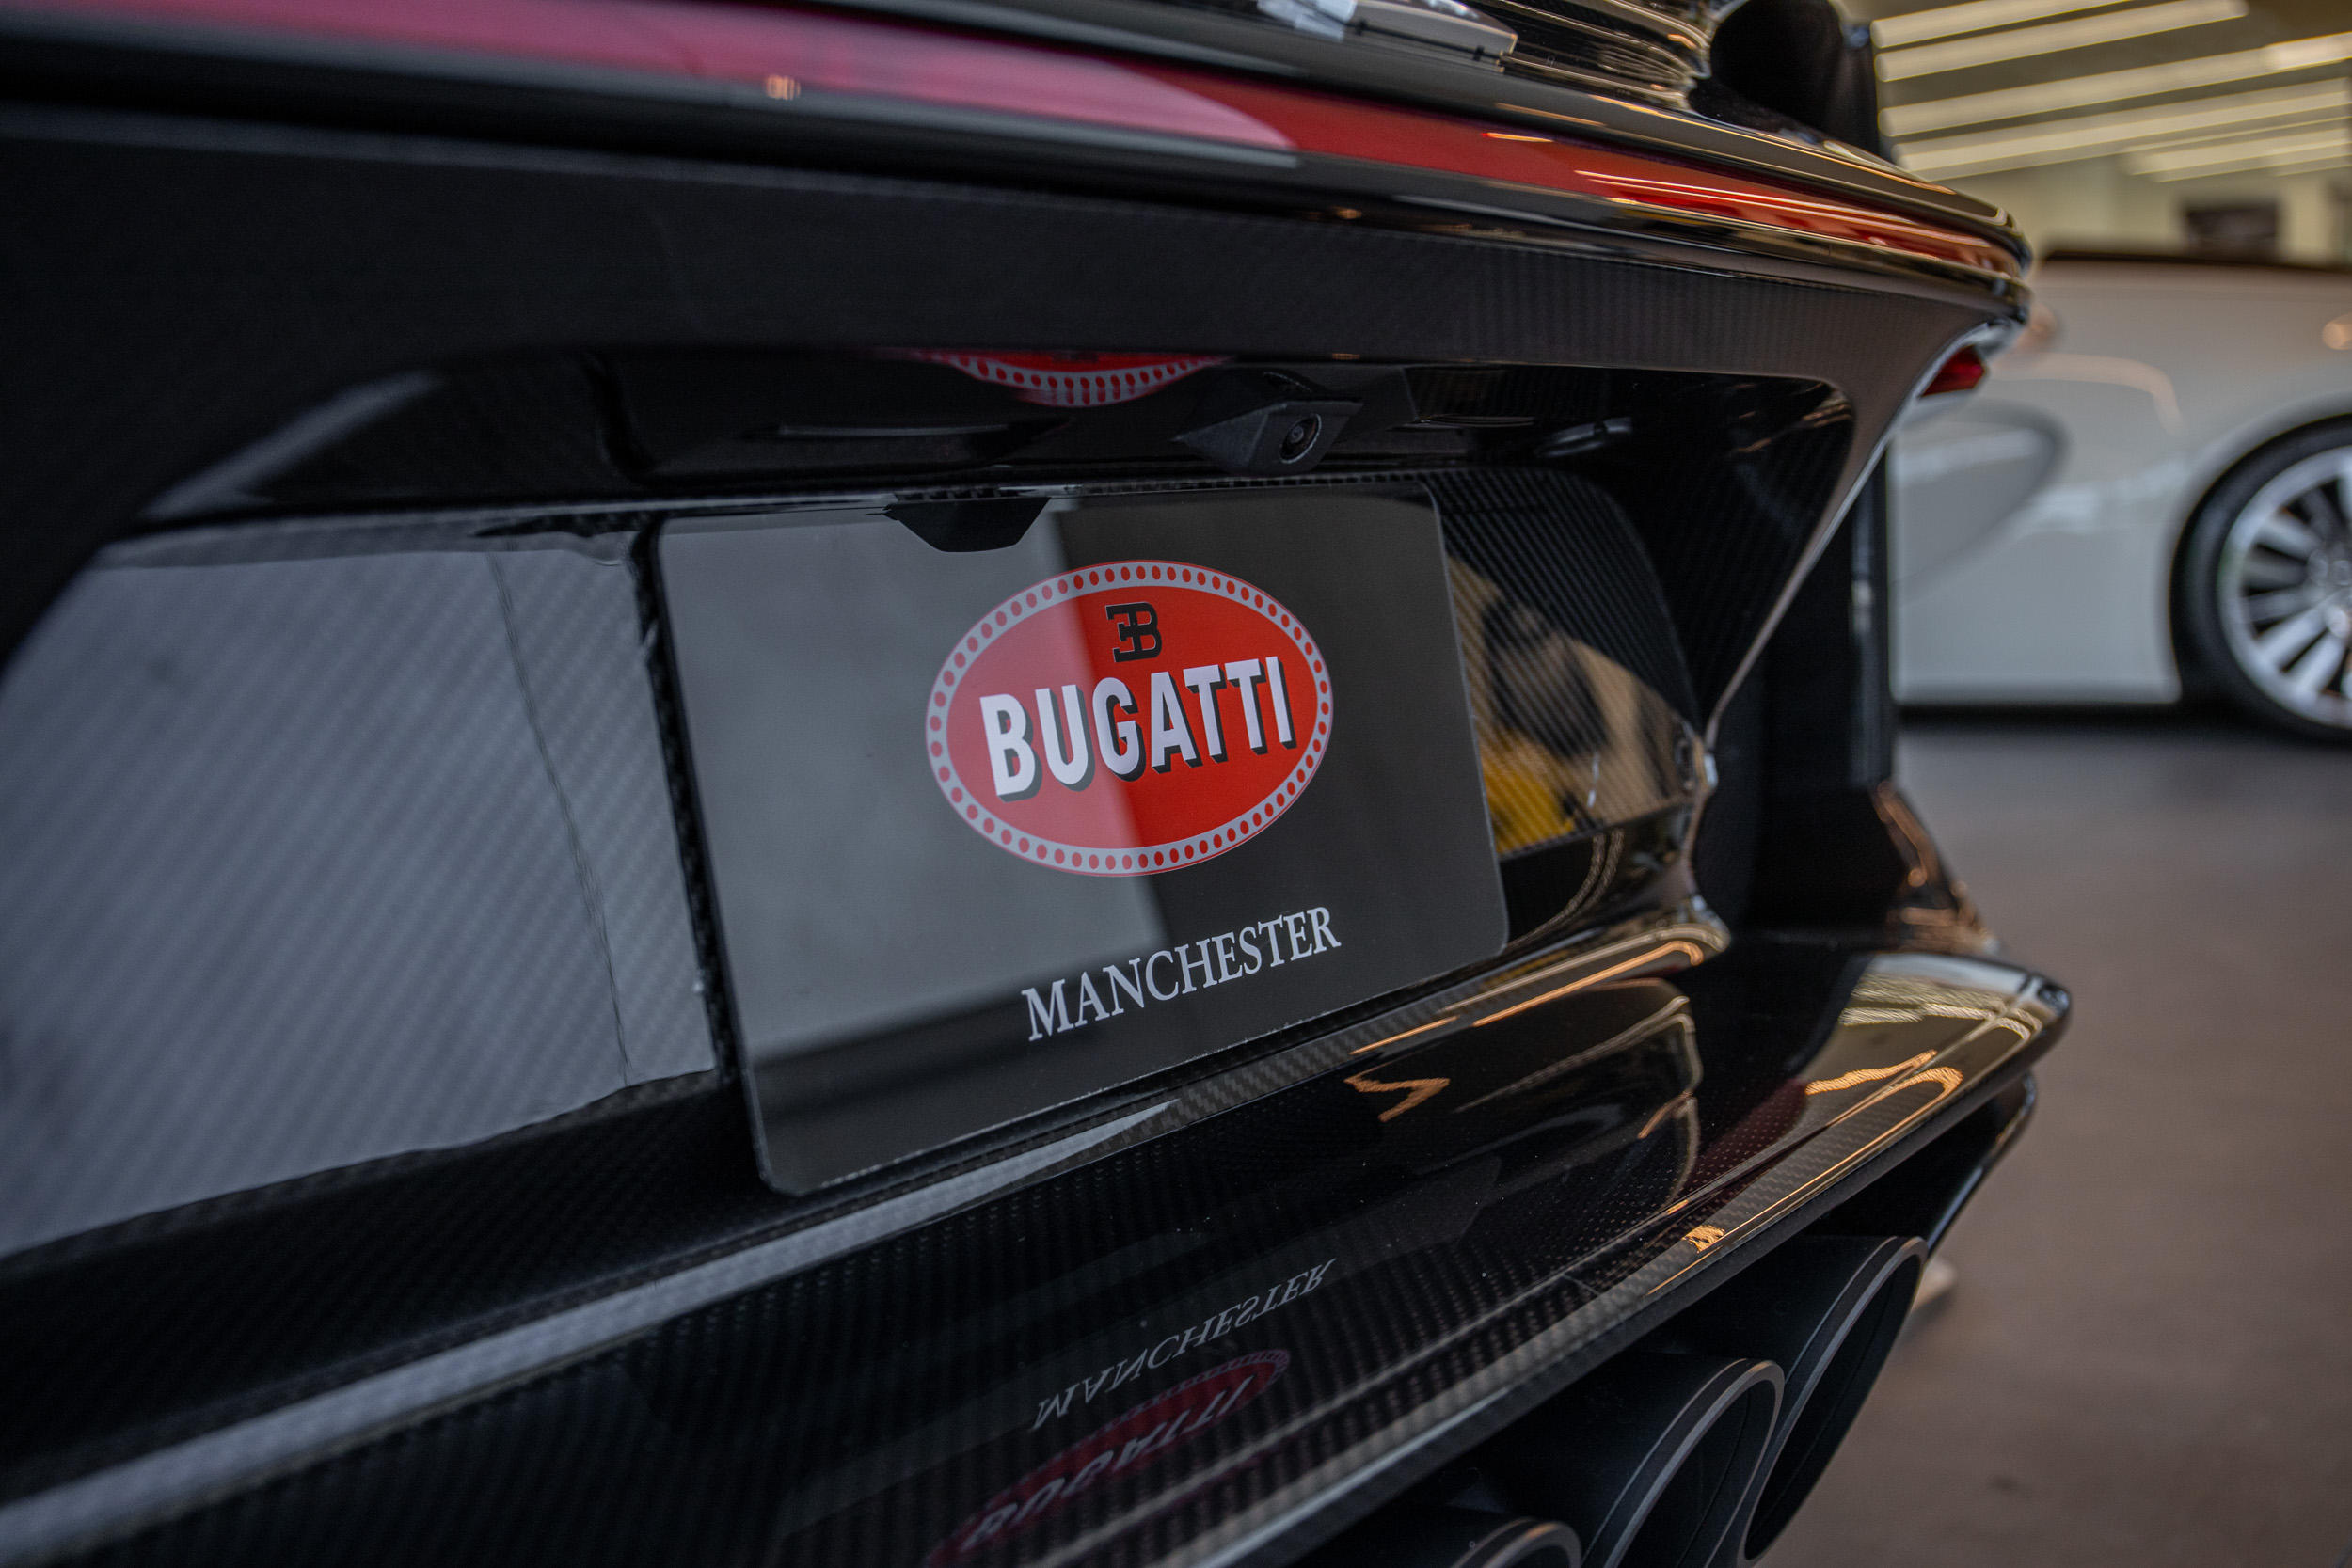 Bugatti Manchester Knutsford 01565 756463